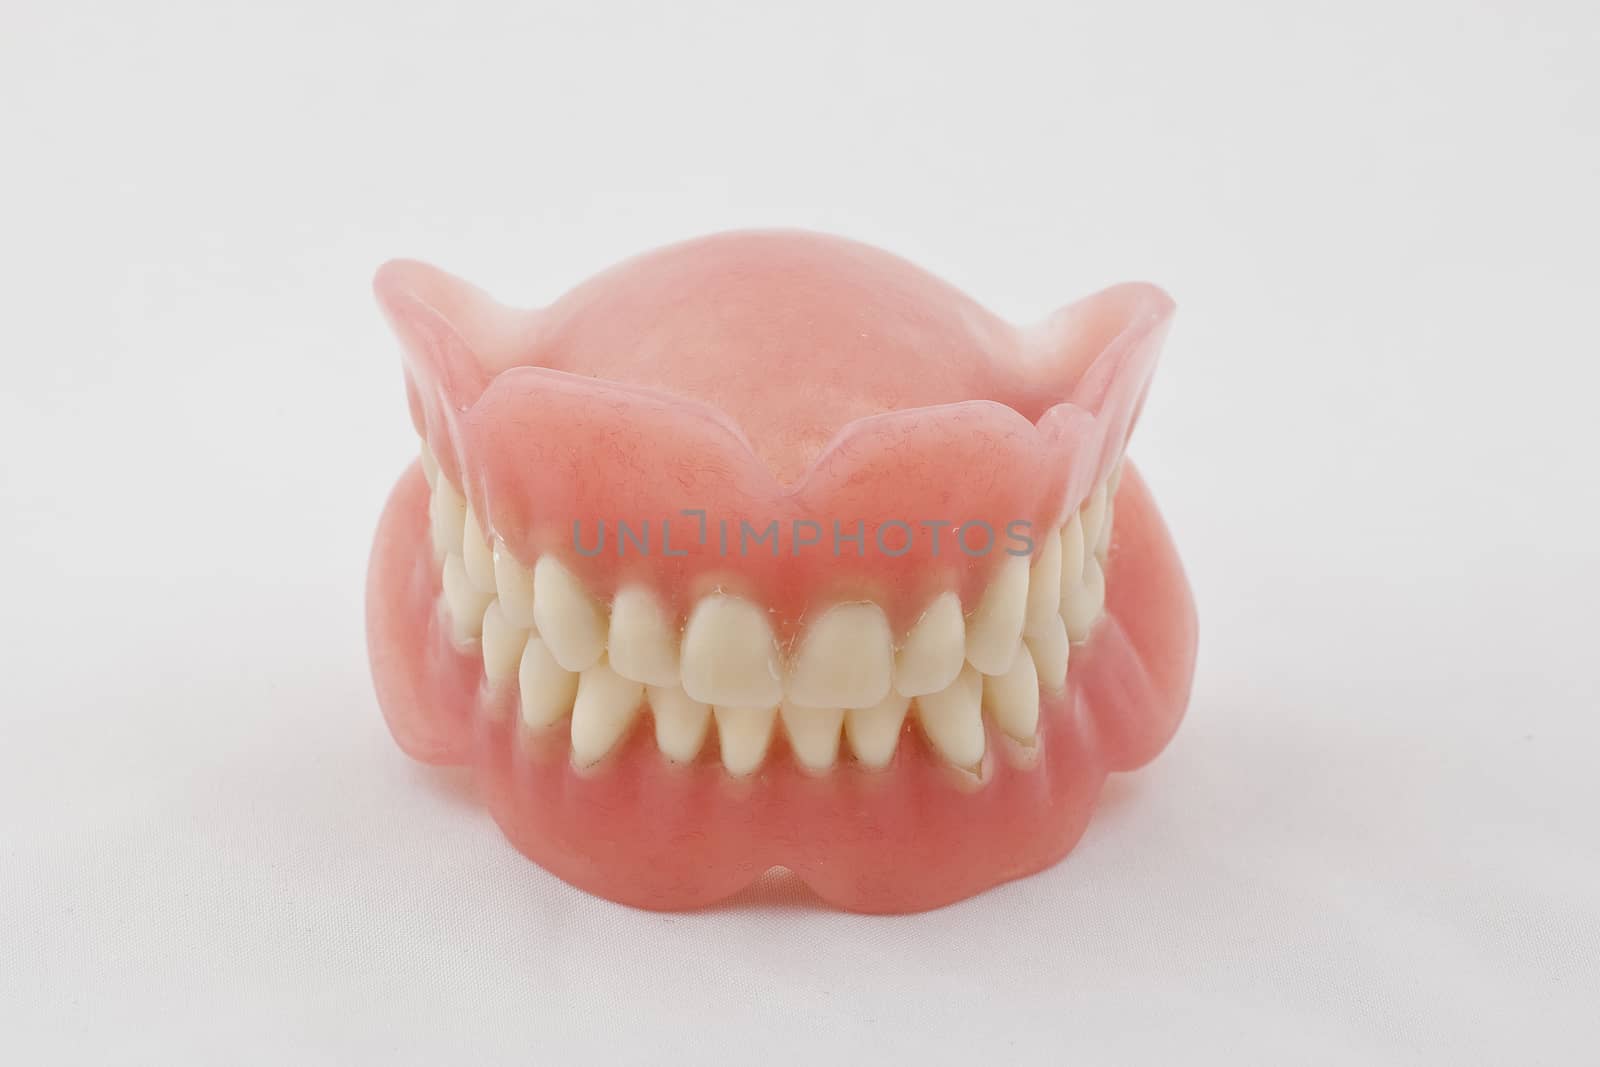 Dental plate on white background